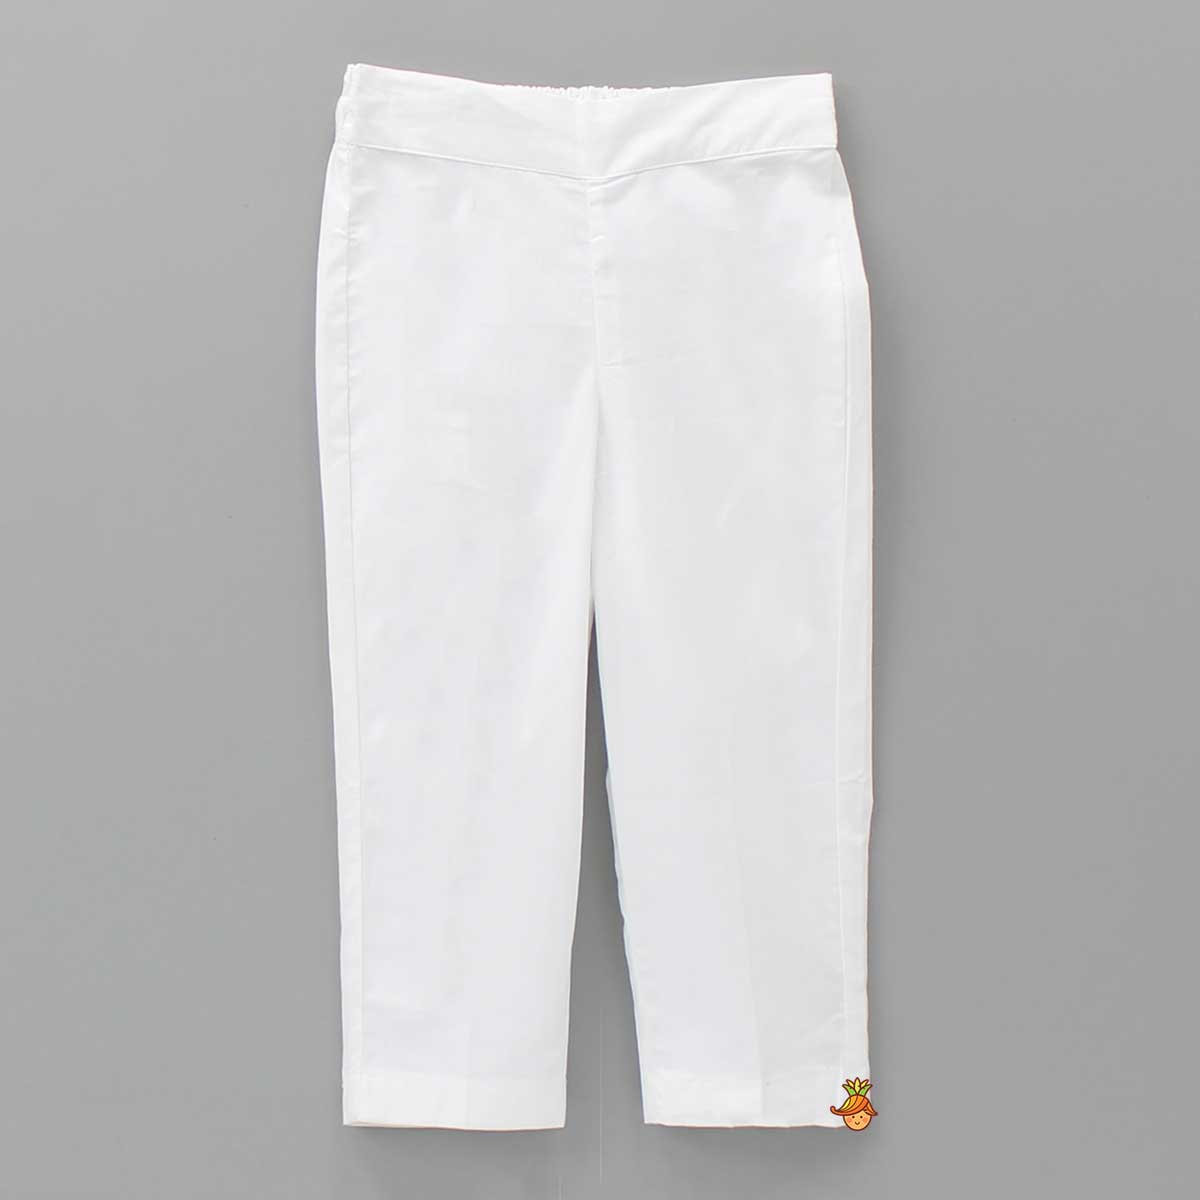 Pre Order: Contrasting Patch Pocket White Kurta And Pyjama